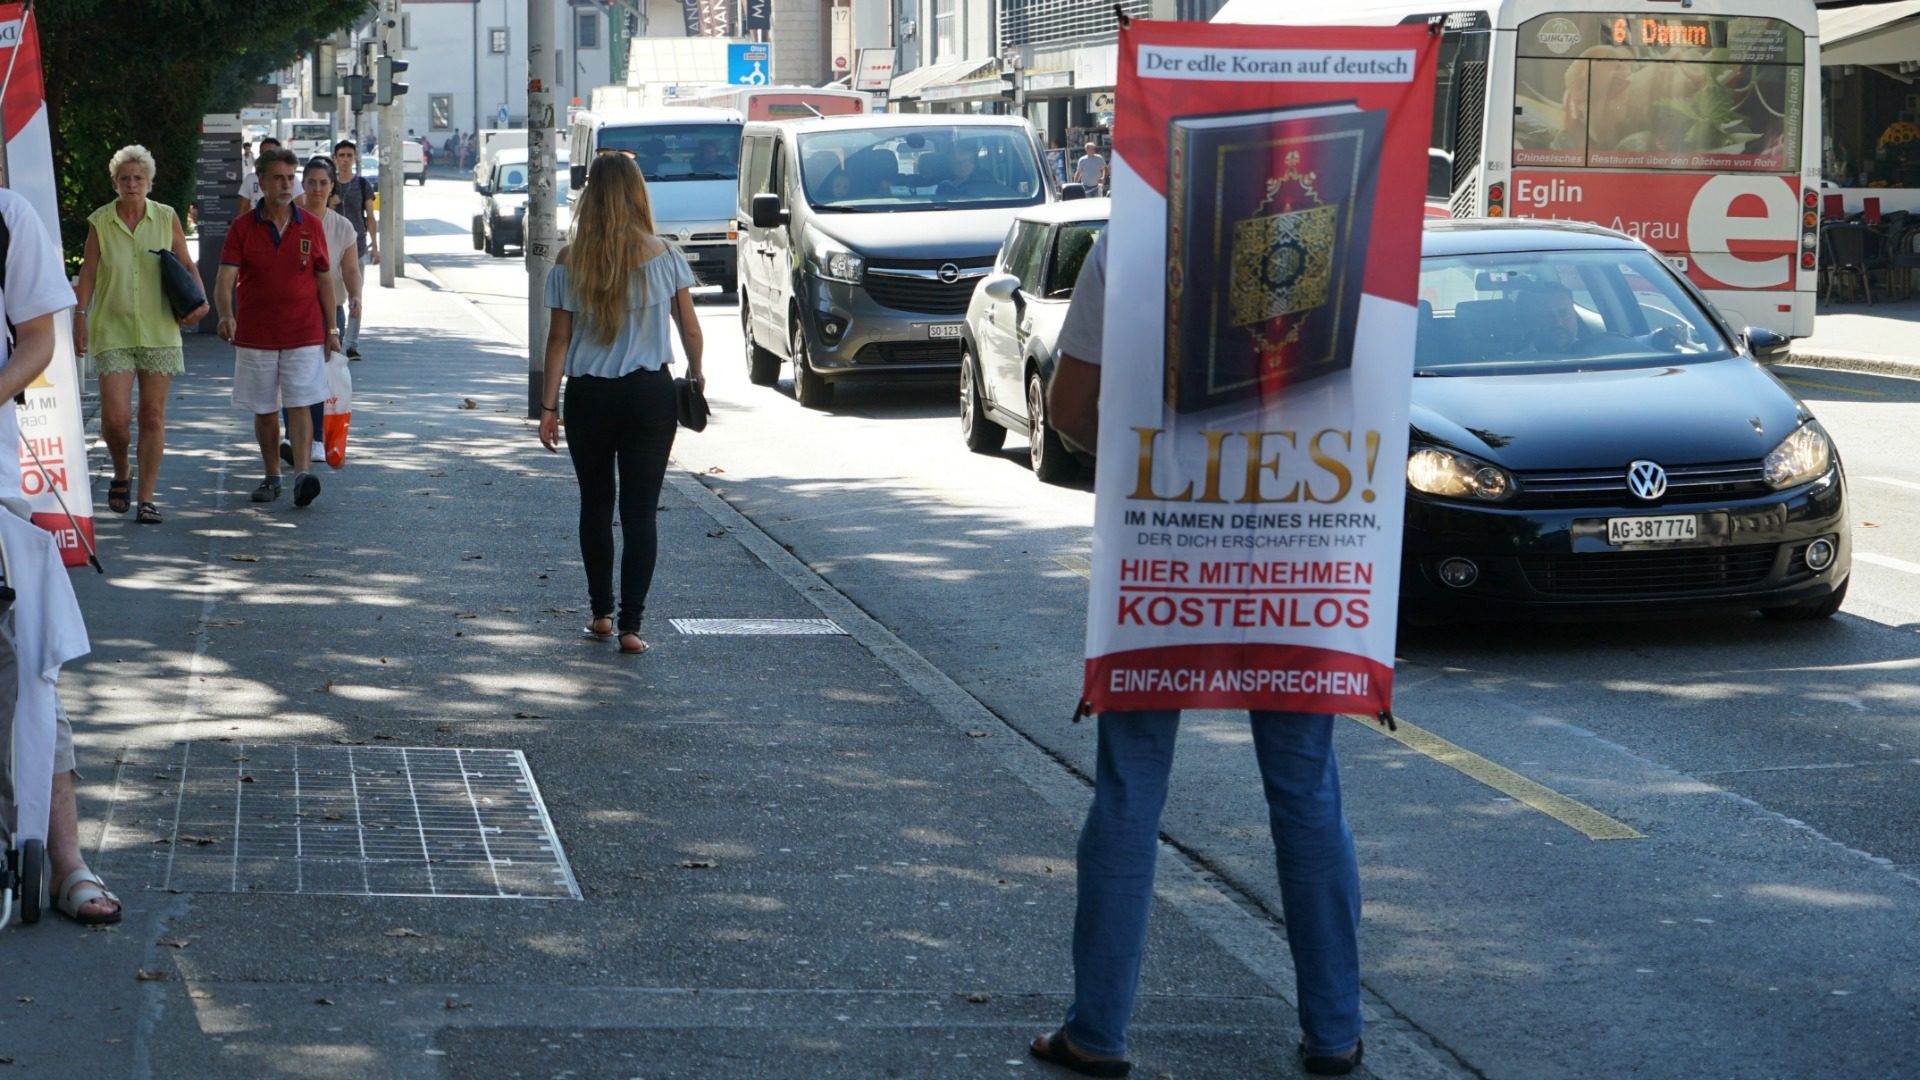 L'organisation "Lies" distribue des Corans dans la rue. (Photo: G. Scherrer)